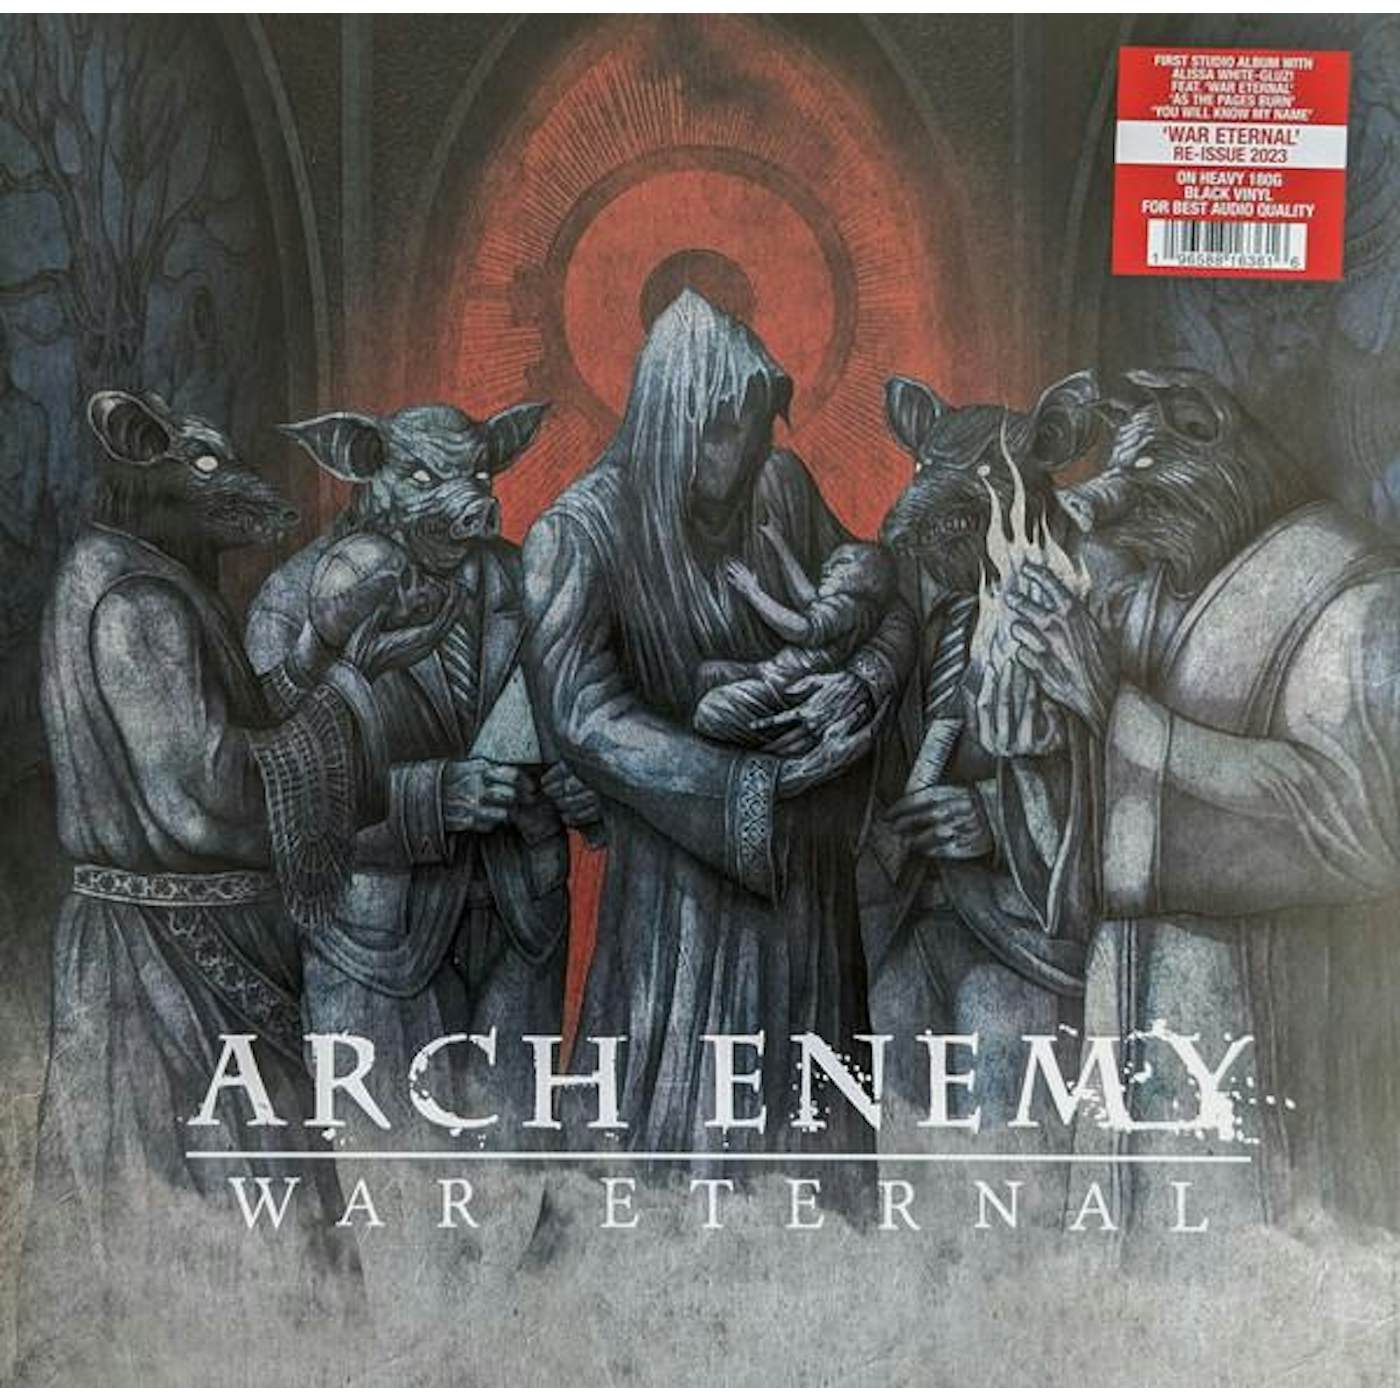 Arch Enemy WAR ETERNAL (RE-ISSUE 2023) Vinyl Record